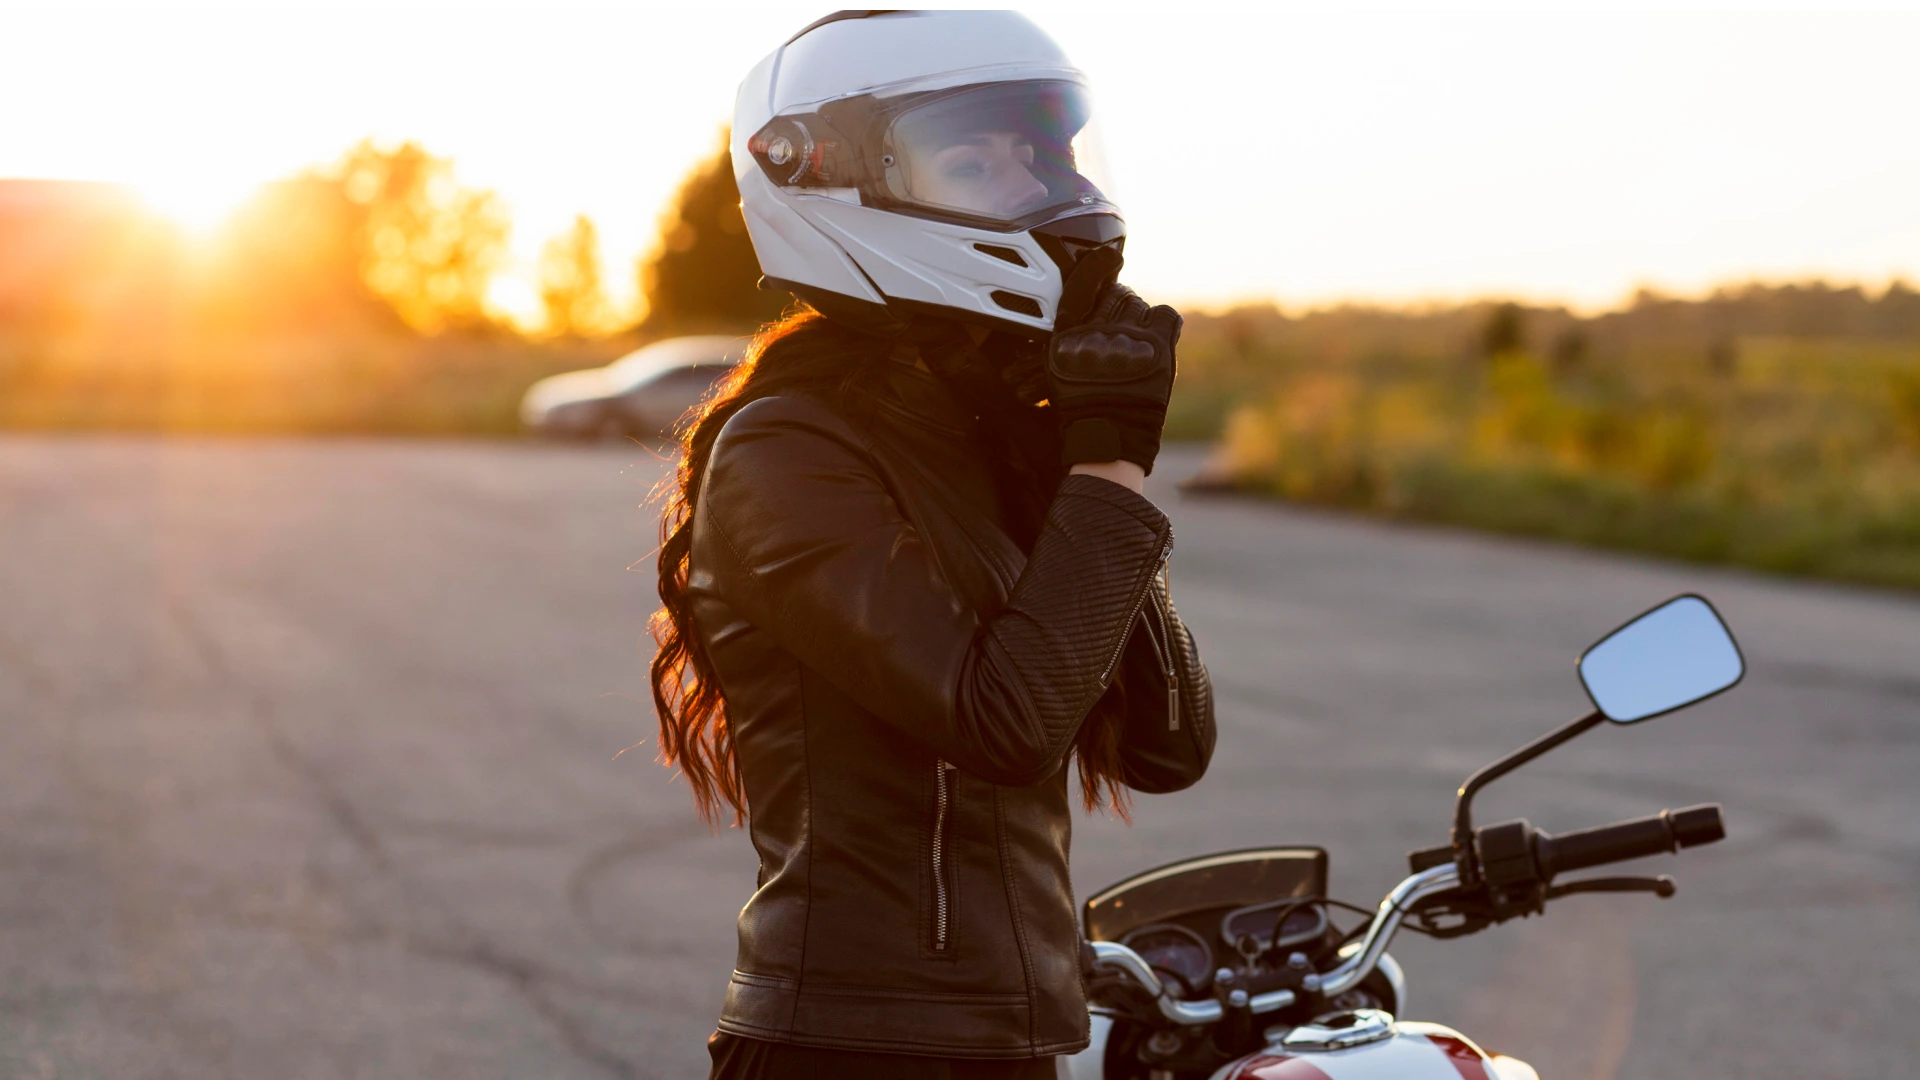 Top 5 Motorcycles in India for Beginner Women Riders